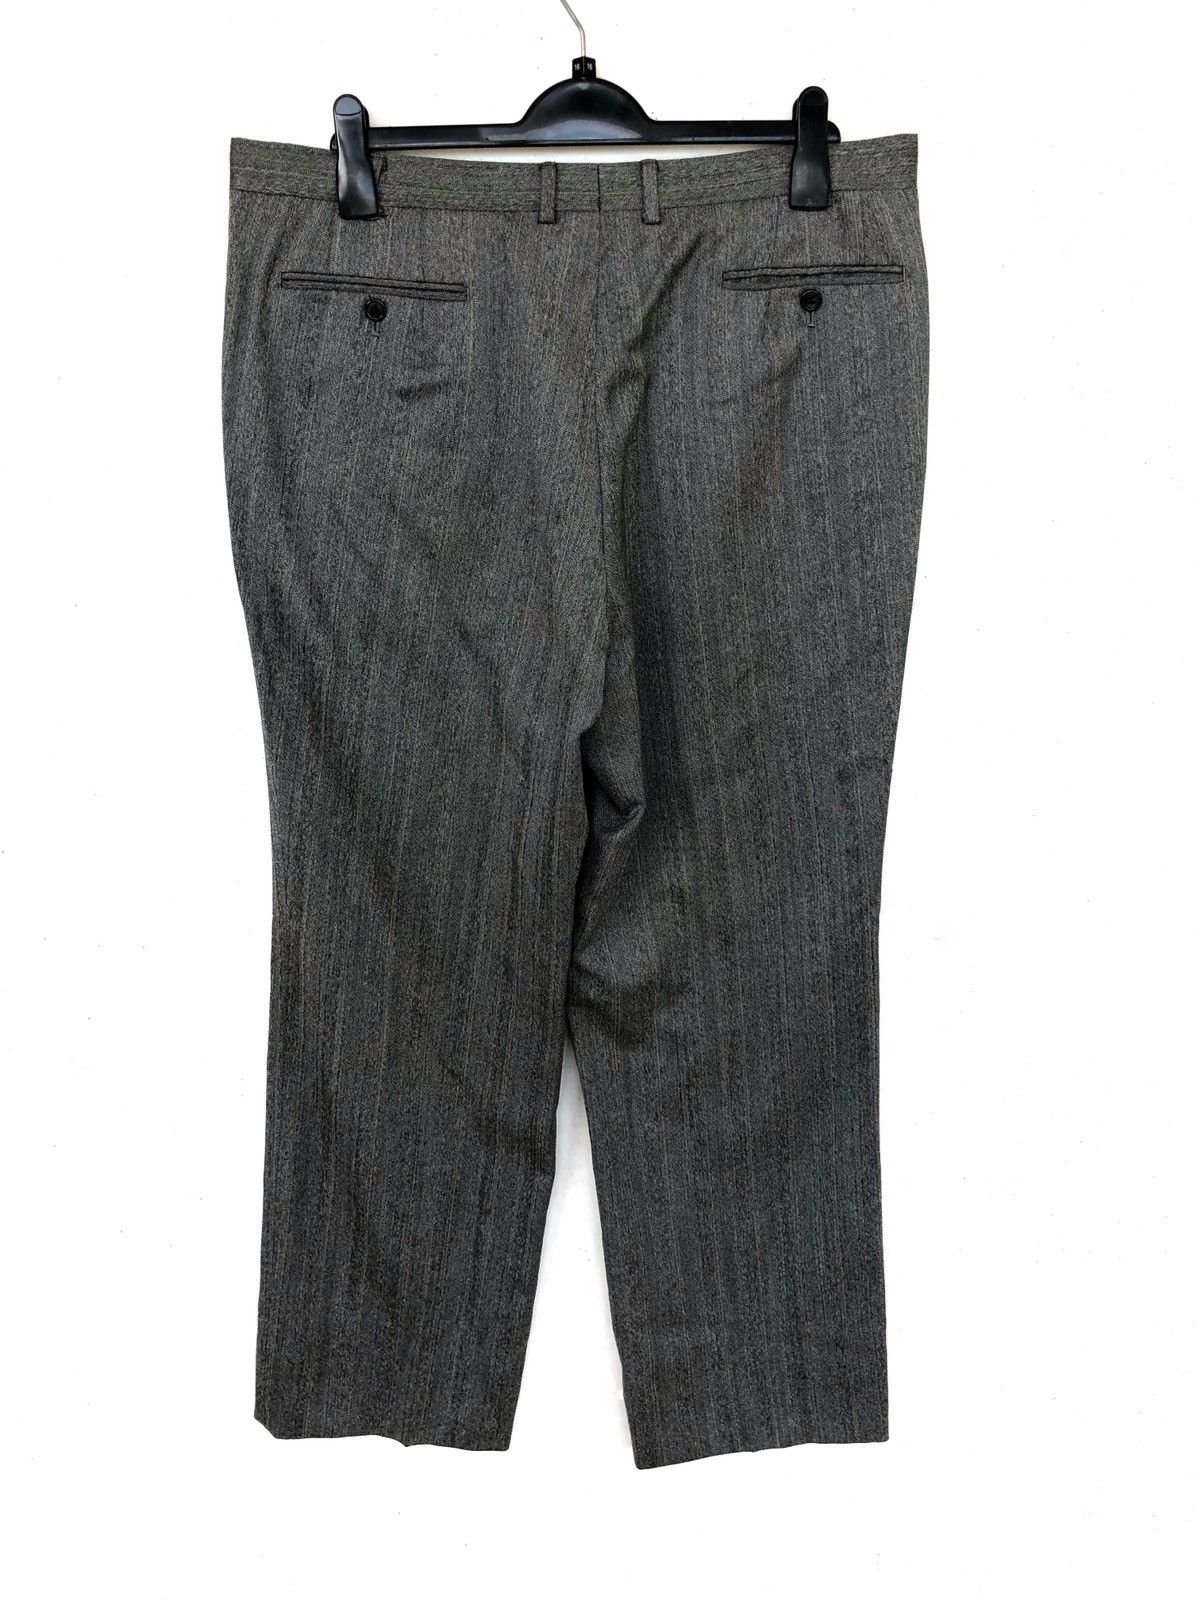 Lanvin GRAIL🔥Lanvin Paris Grey Striped Wool Oversized Baggy Pants Size US 38 / EU 54 - 6 Thumbnail